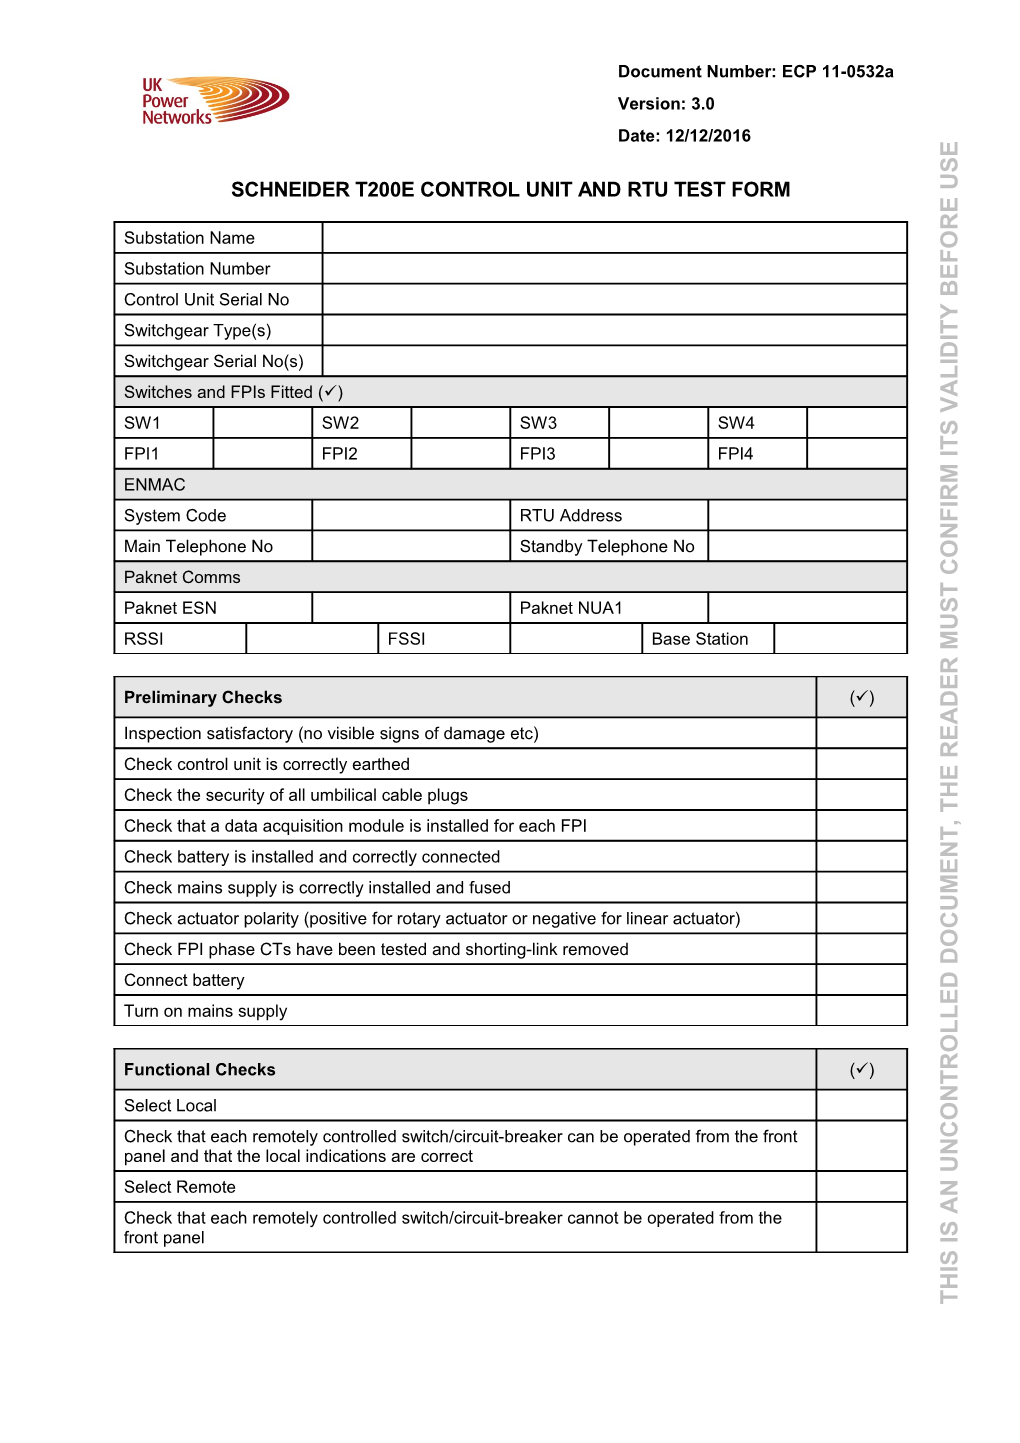 ECP 11-0532A Schneider T200E Control Unit and RTU Test Form